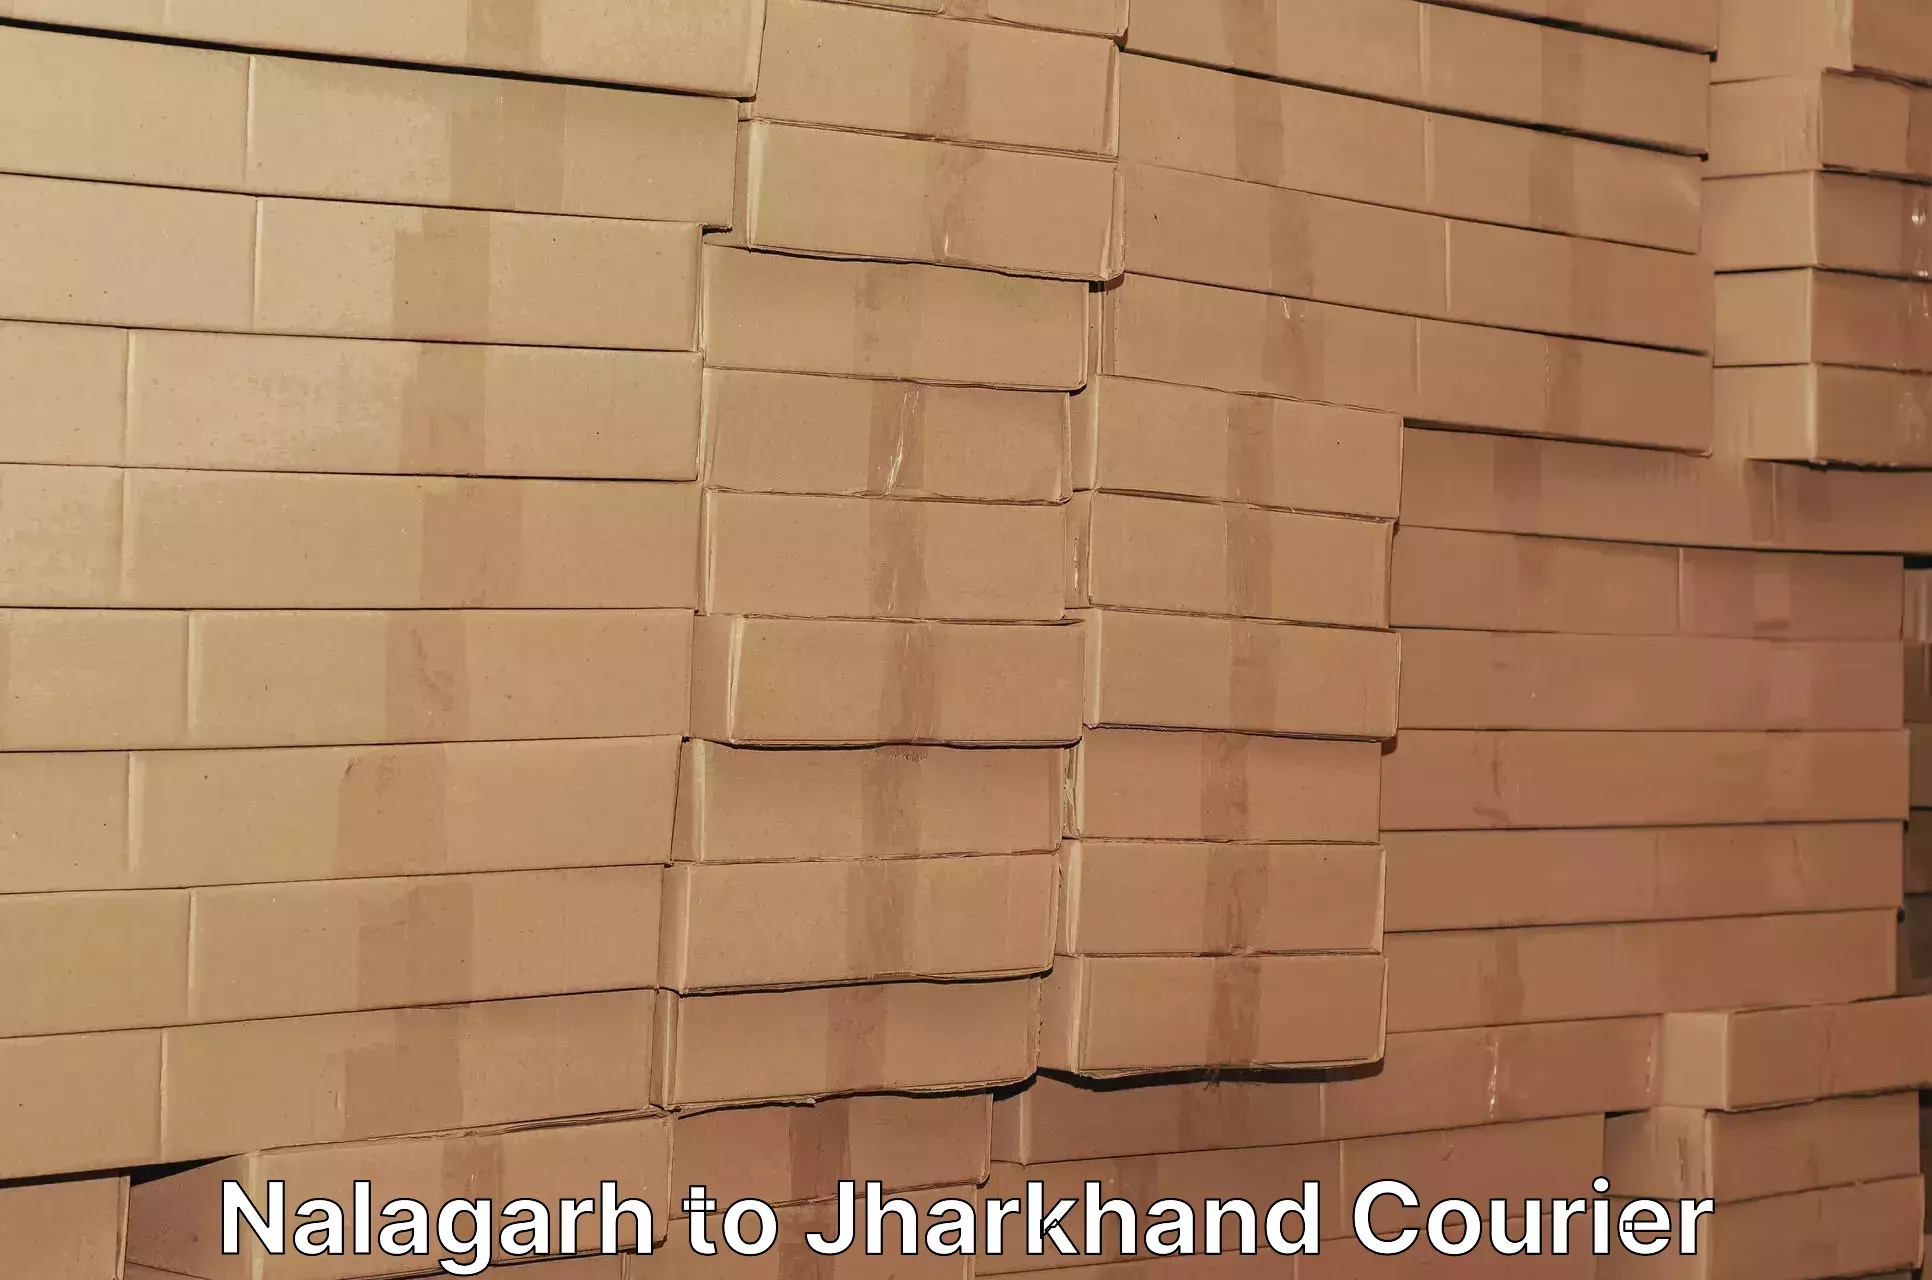 Supply chain efficiency Nalagarh to Jharkhand